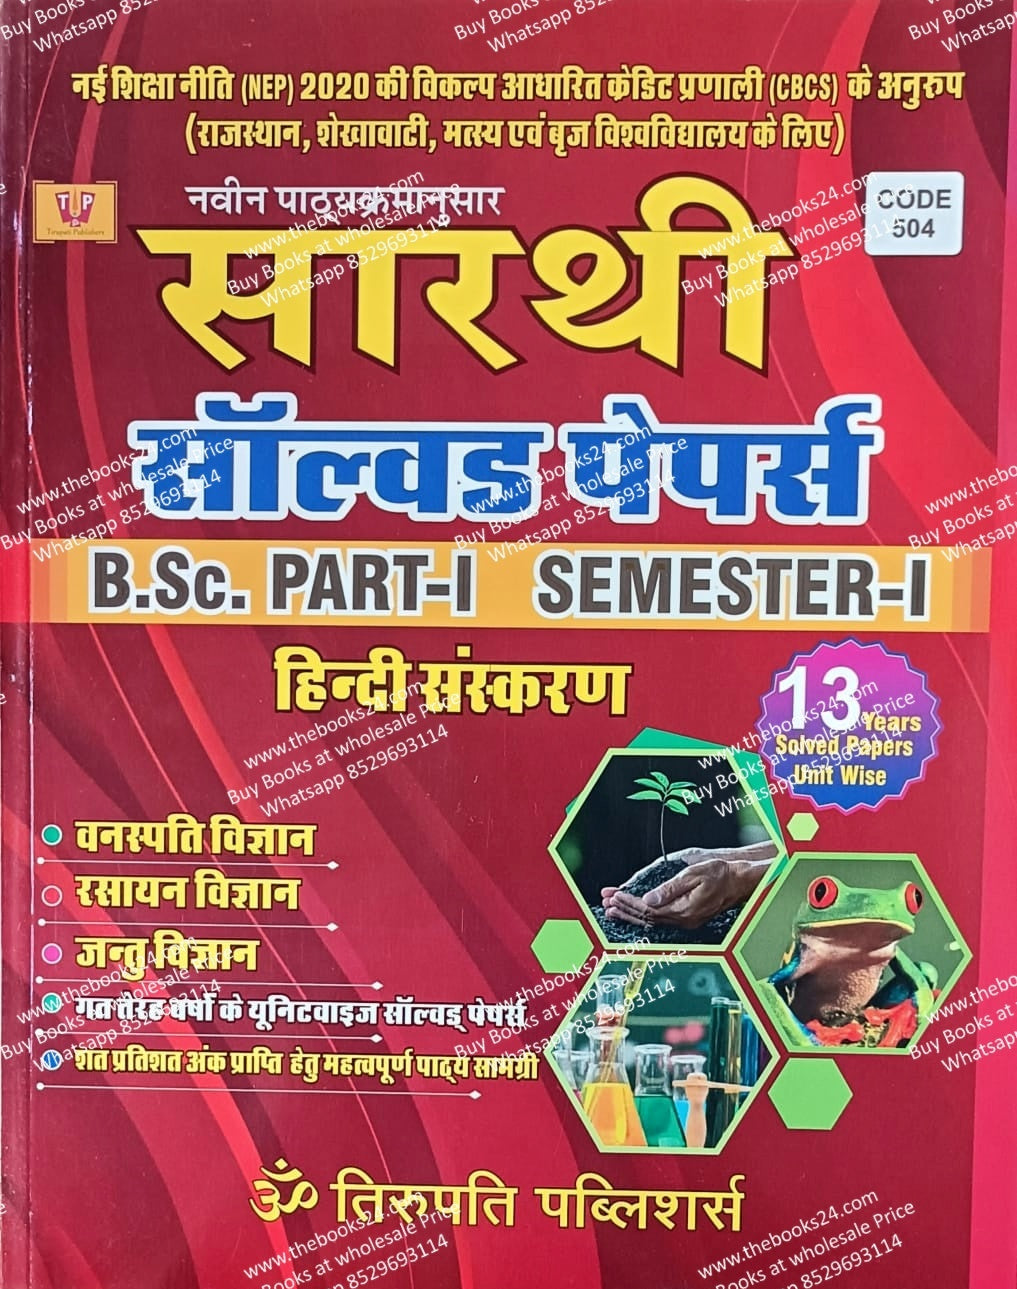 Sarthi B.Sc. Part-I (Semester-I) CBZ Solved Paper in Hindi